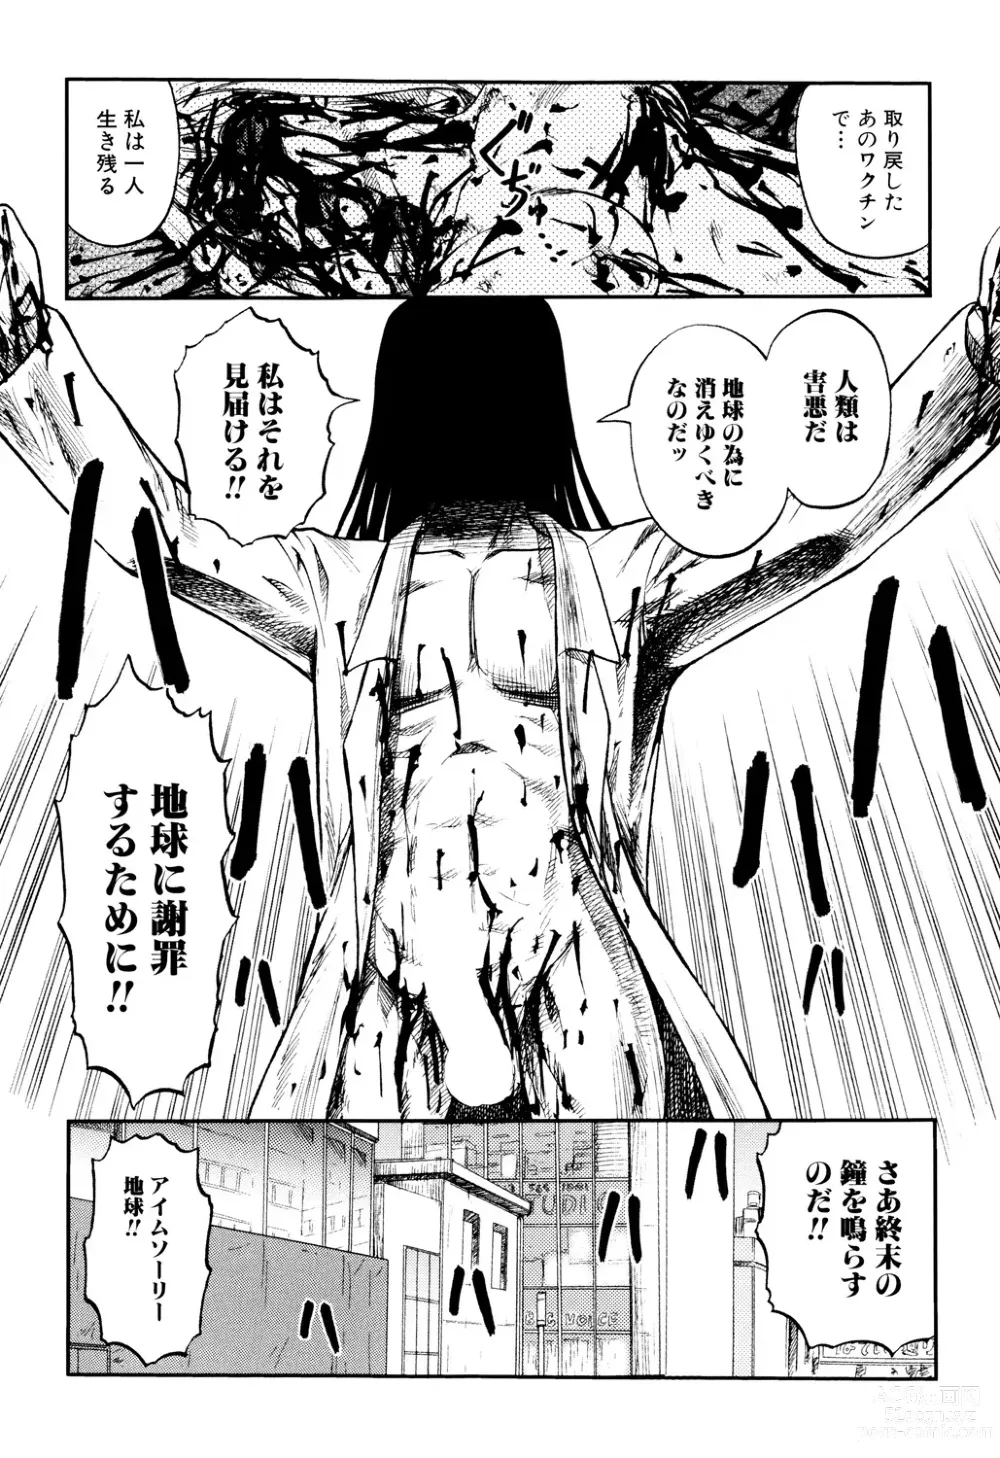 Page 149 of manga Ingyaku Kangoku Tou